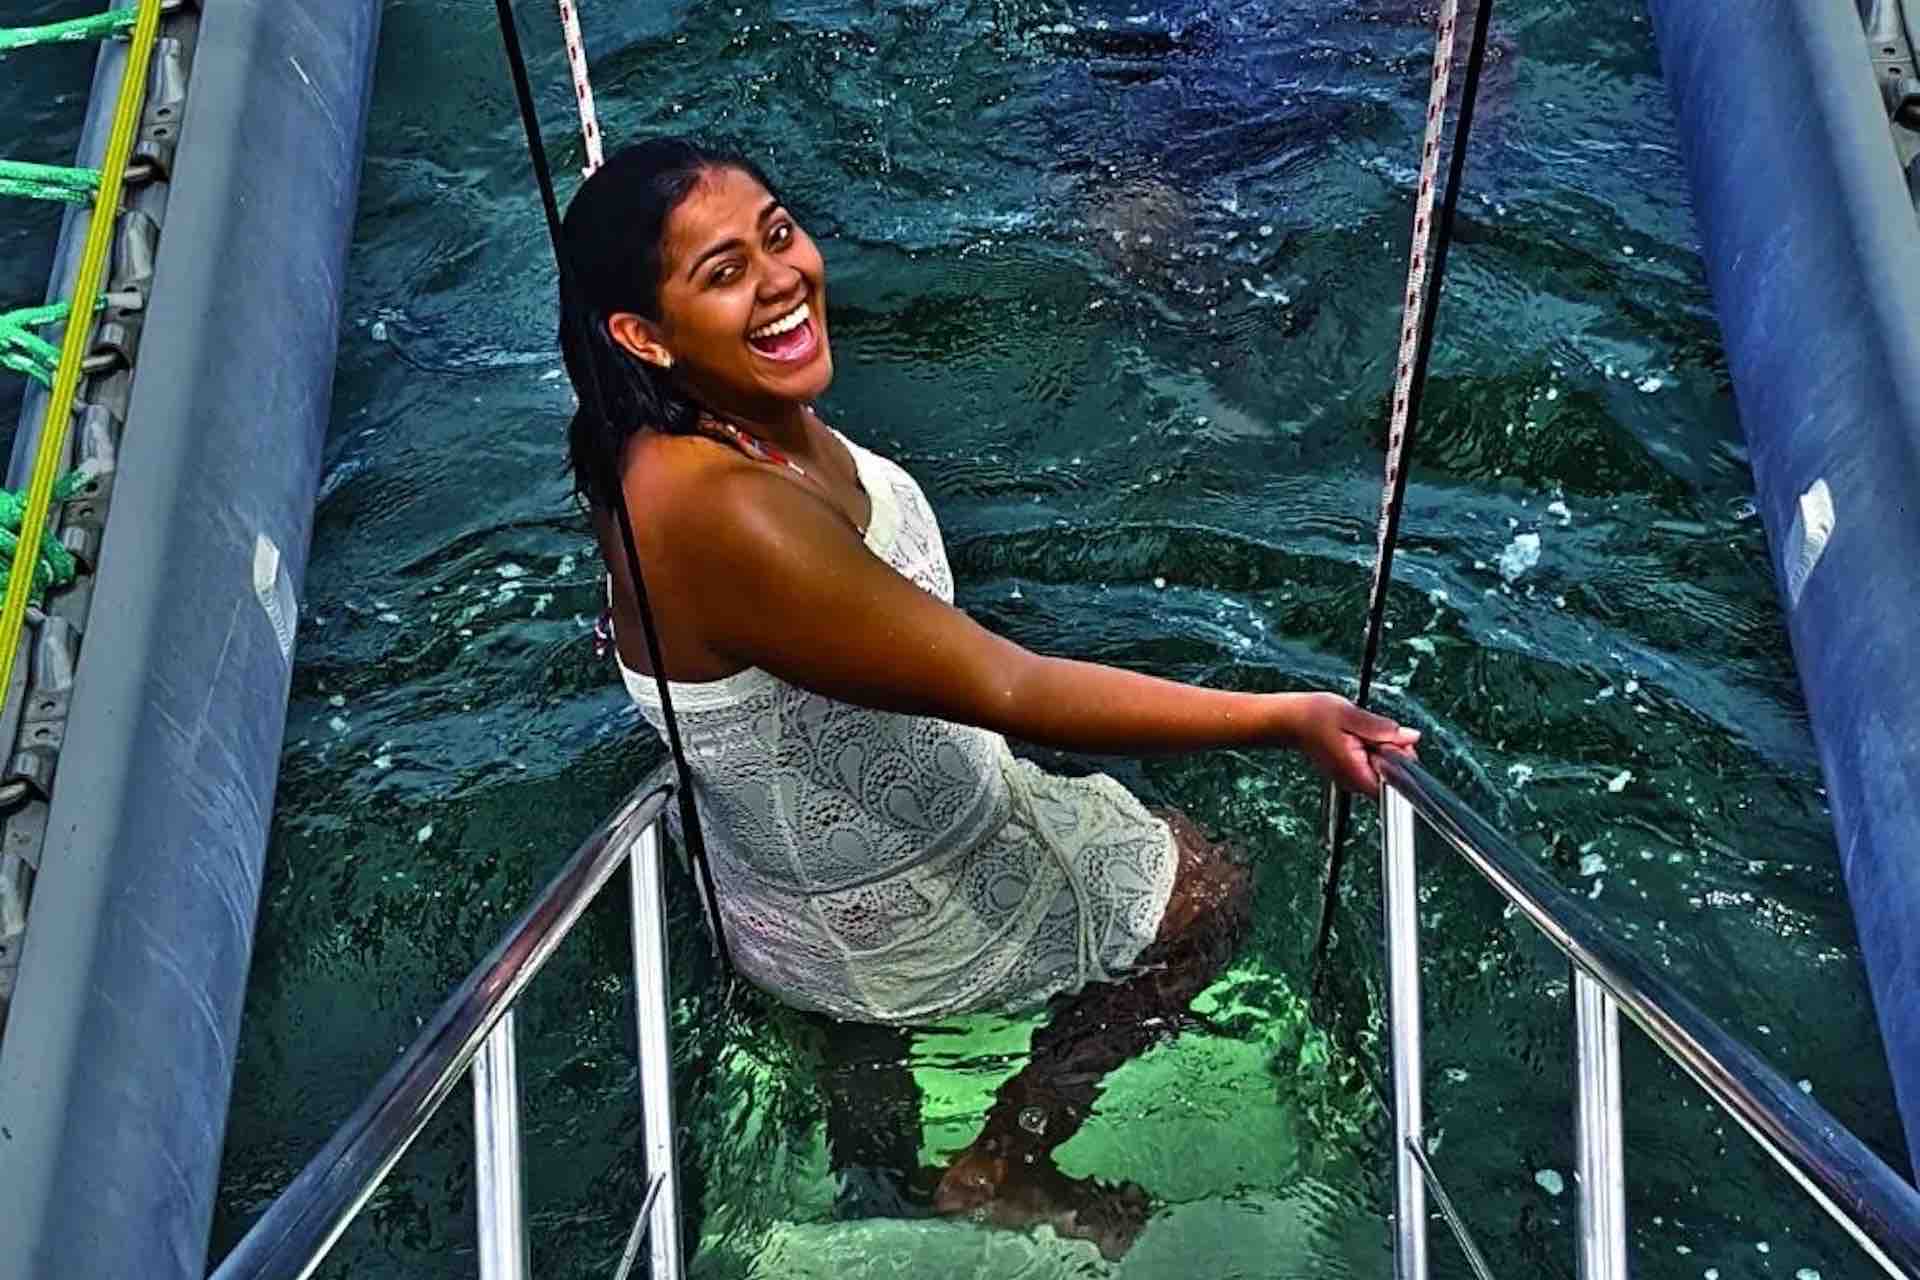 Manga Taboga island sailboat charter smiling woman stairs